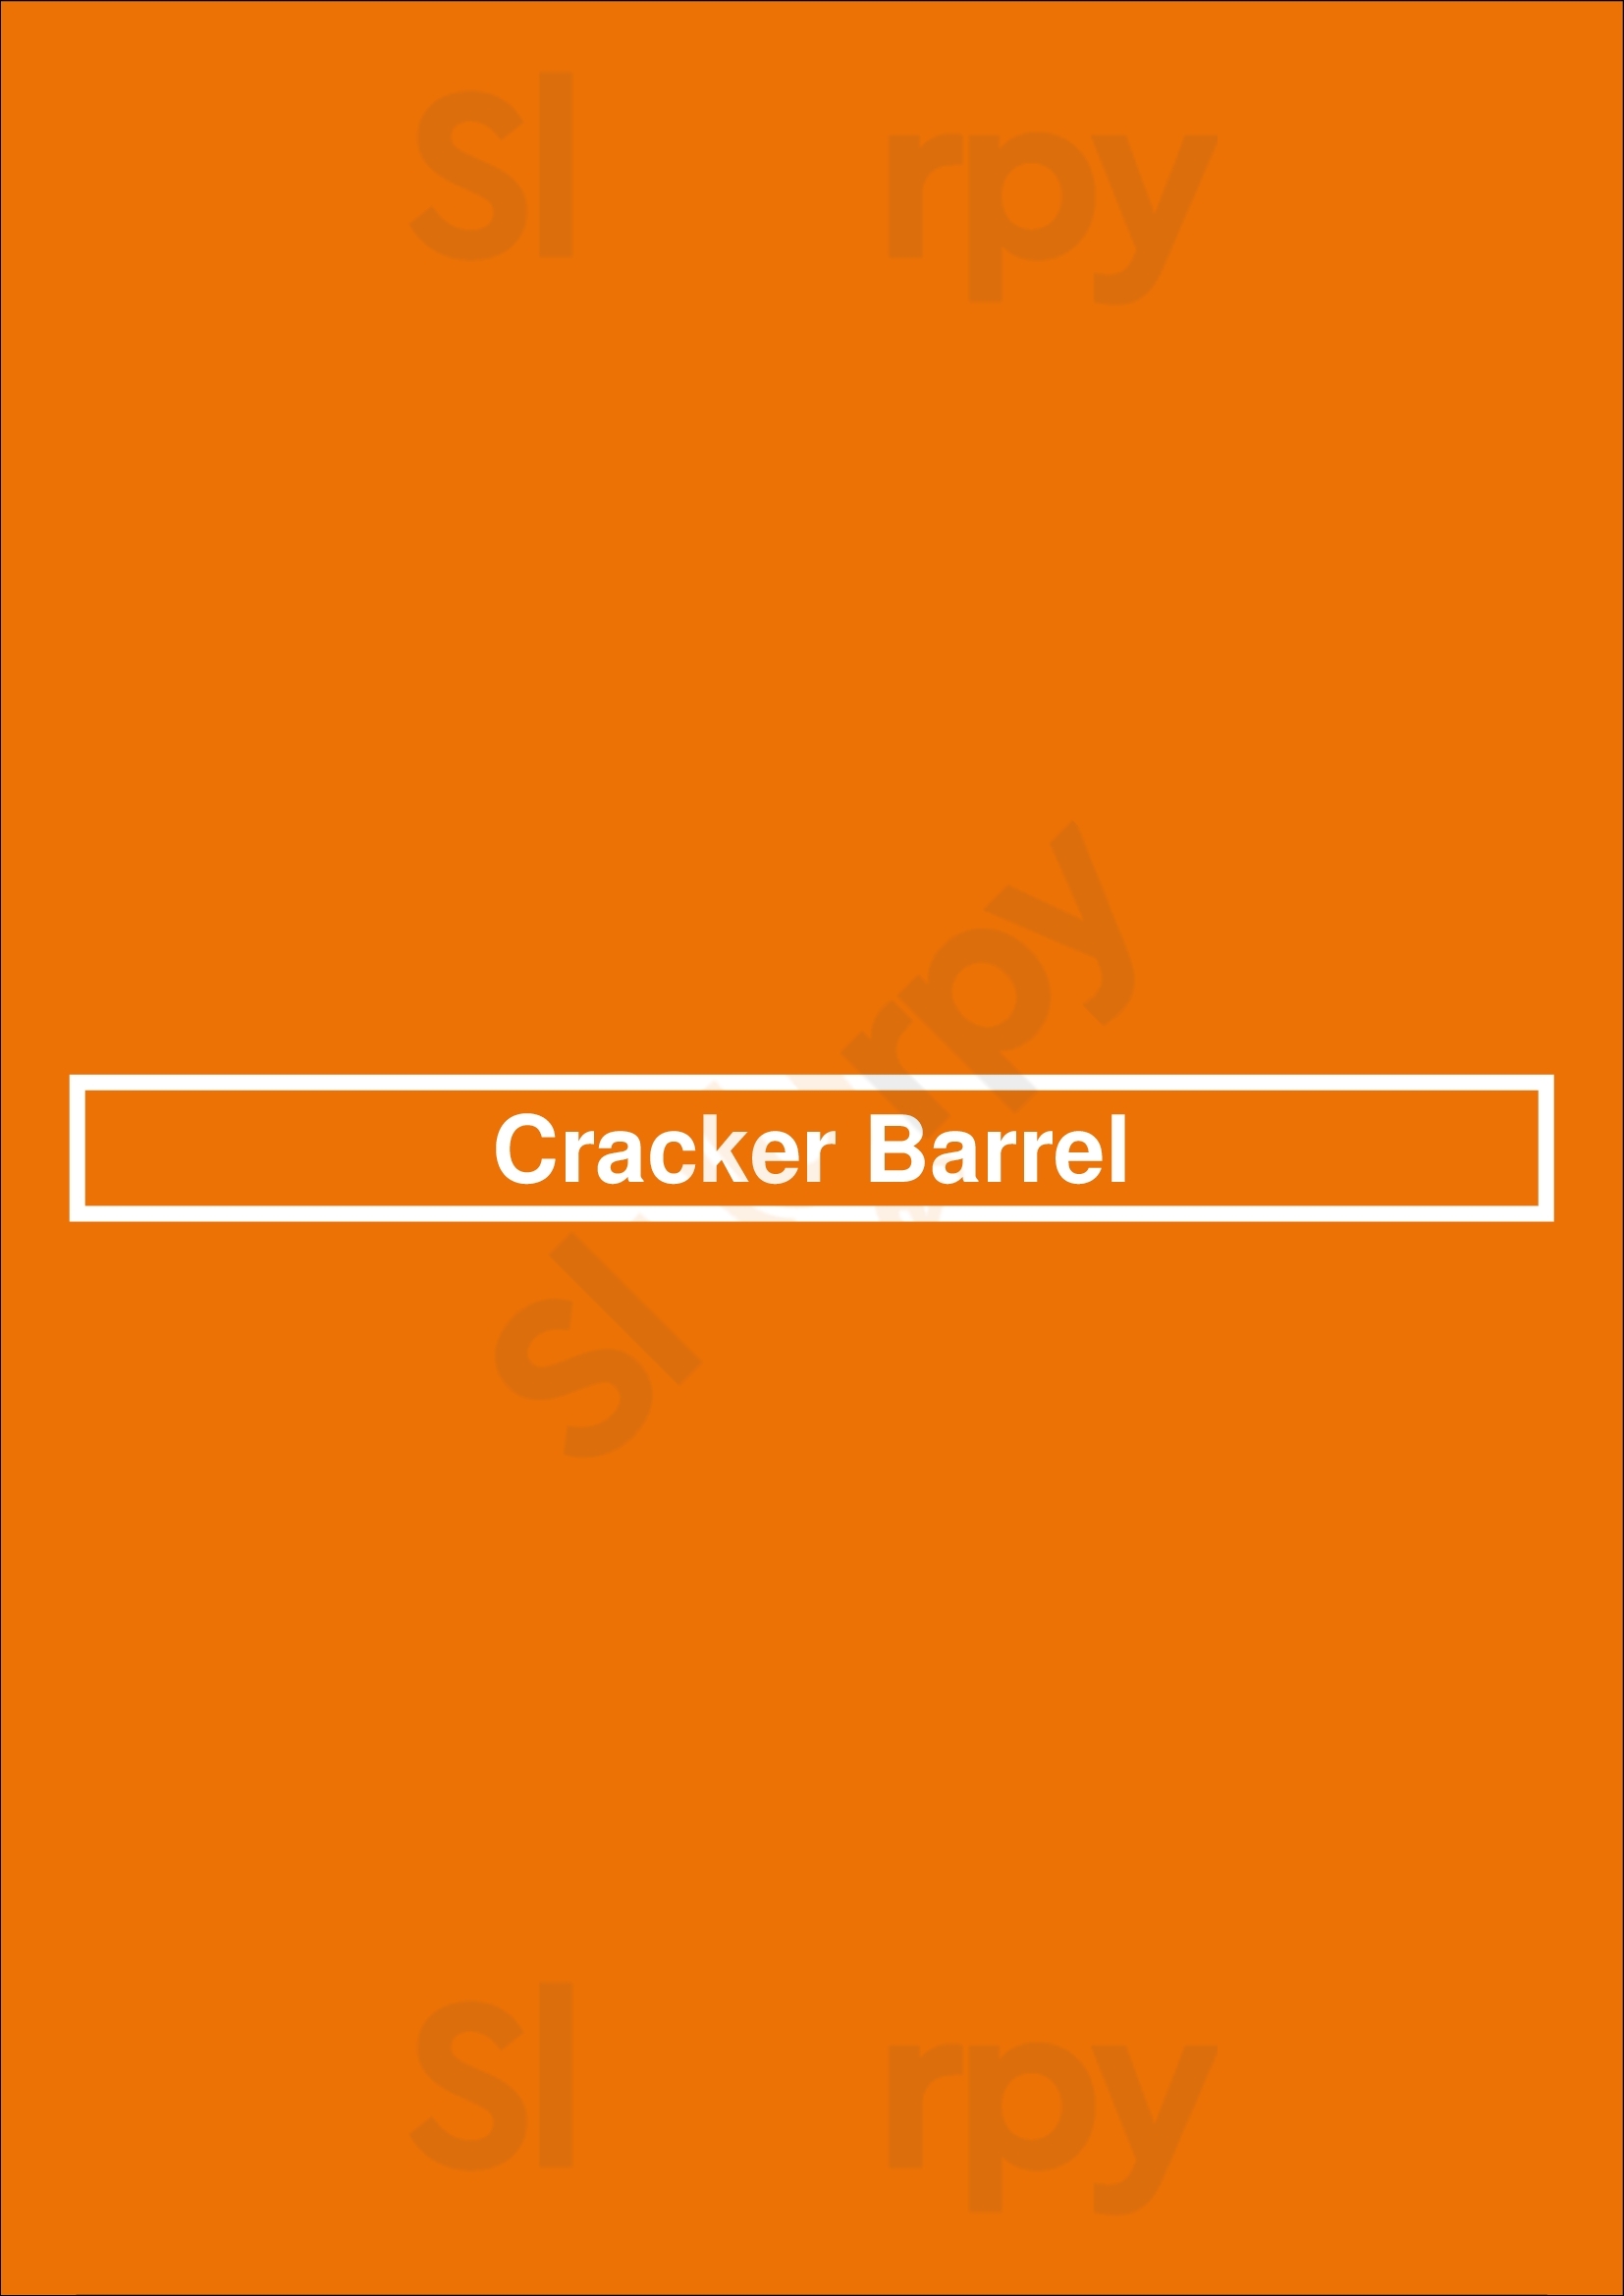 Cracker Barrel Greenville Menu - 1